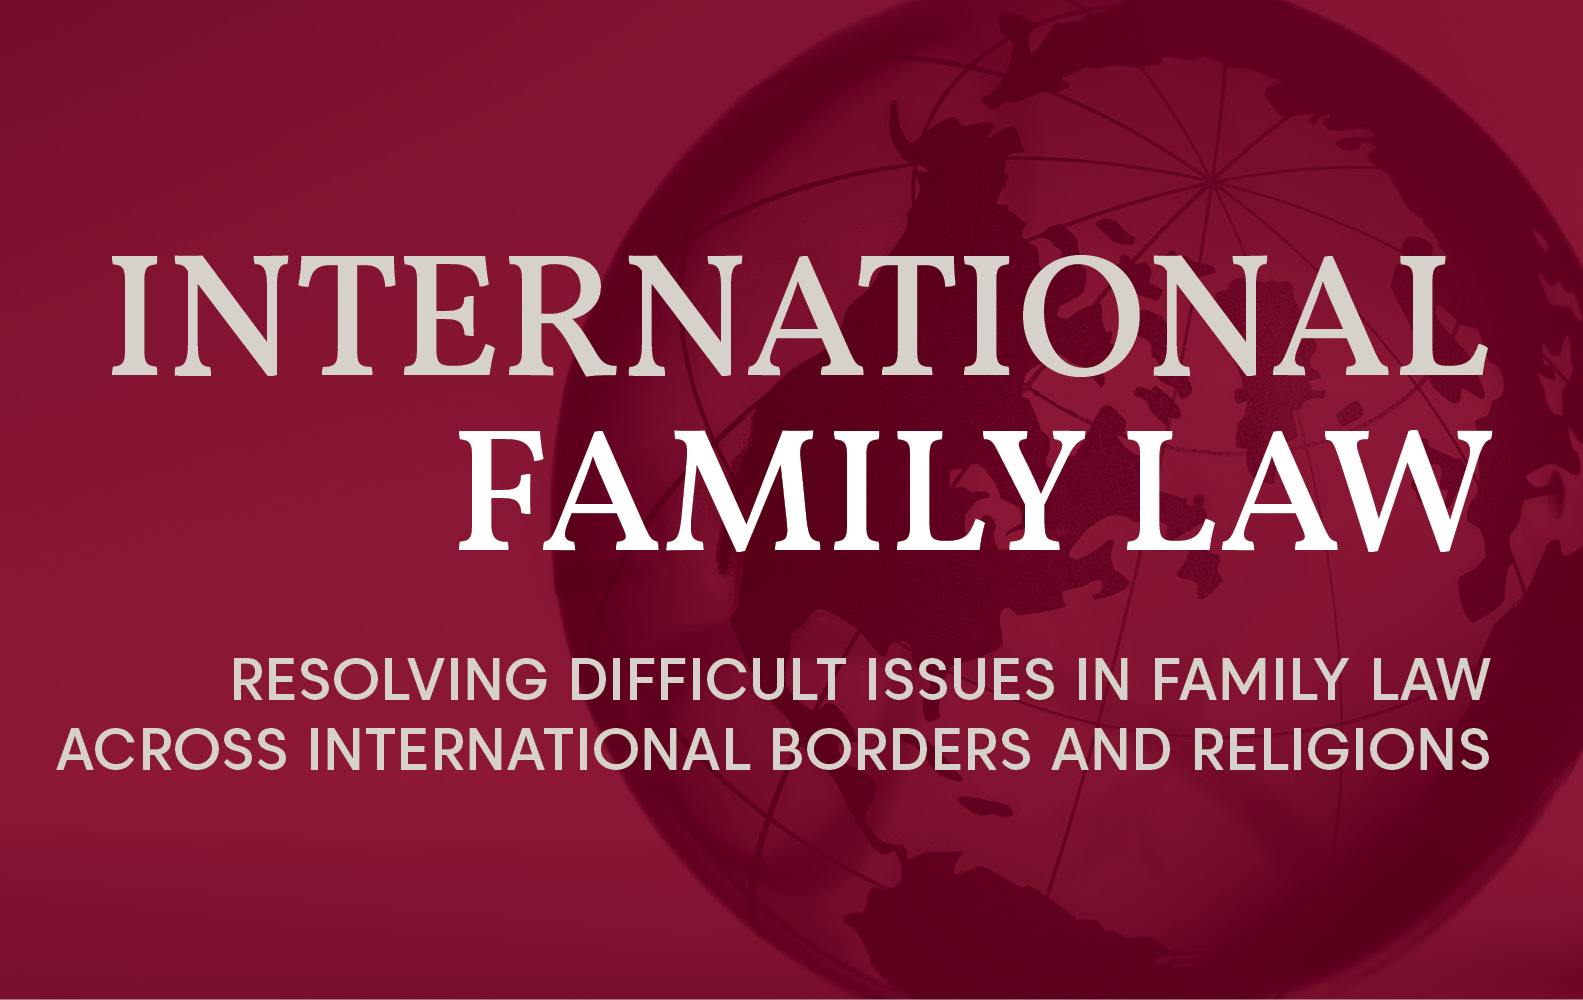 International Family Law